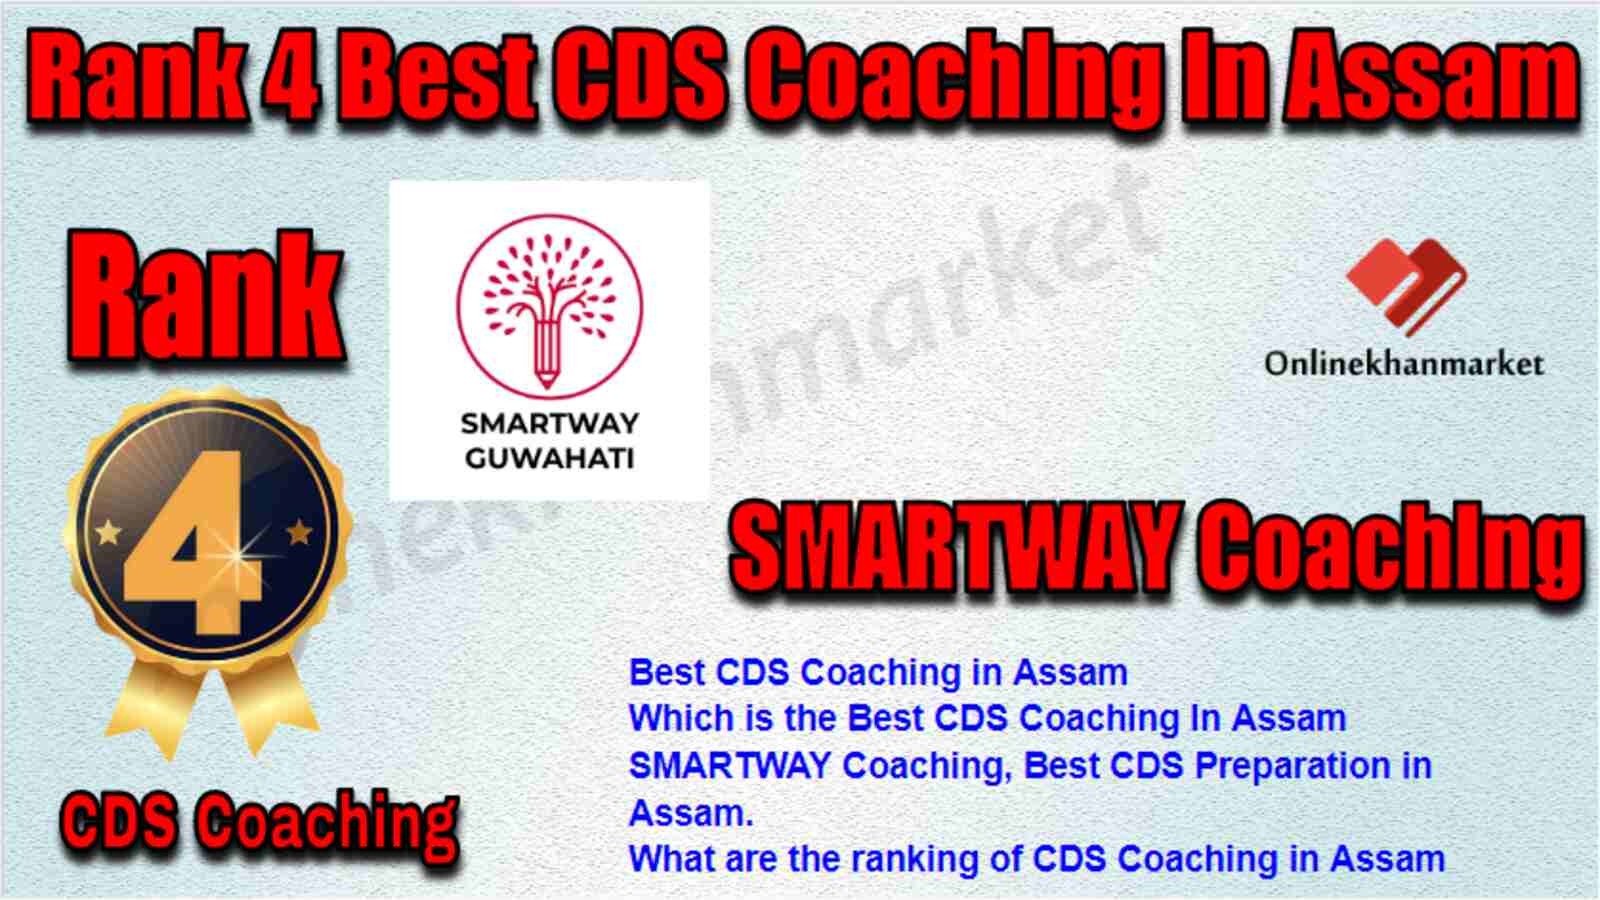 Rank 4 Best CDS Coaching in Assam